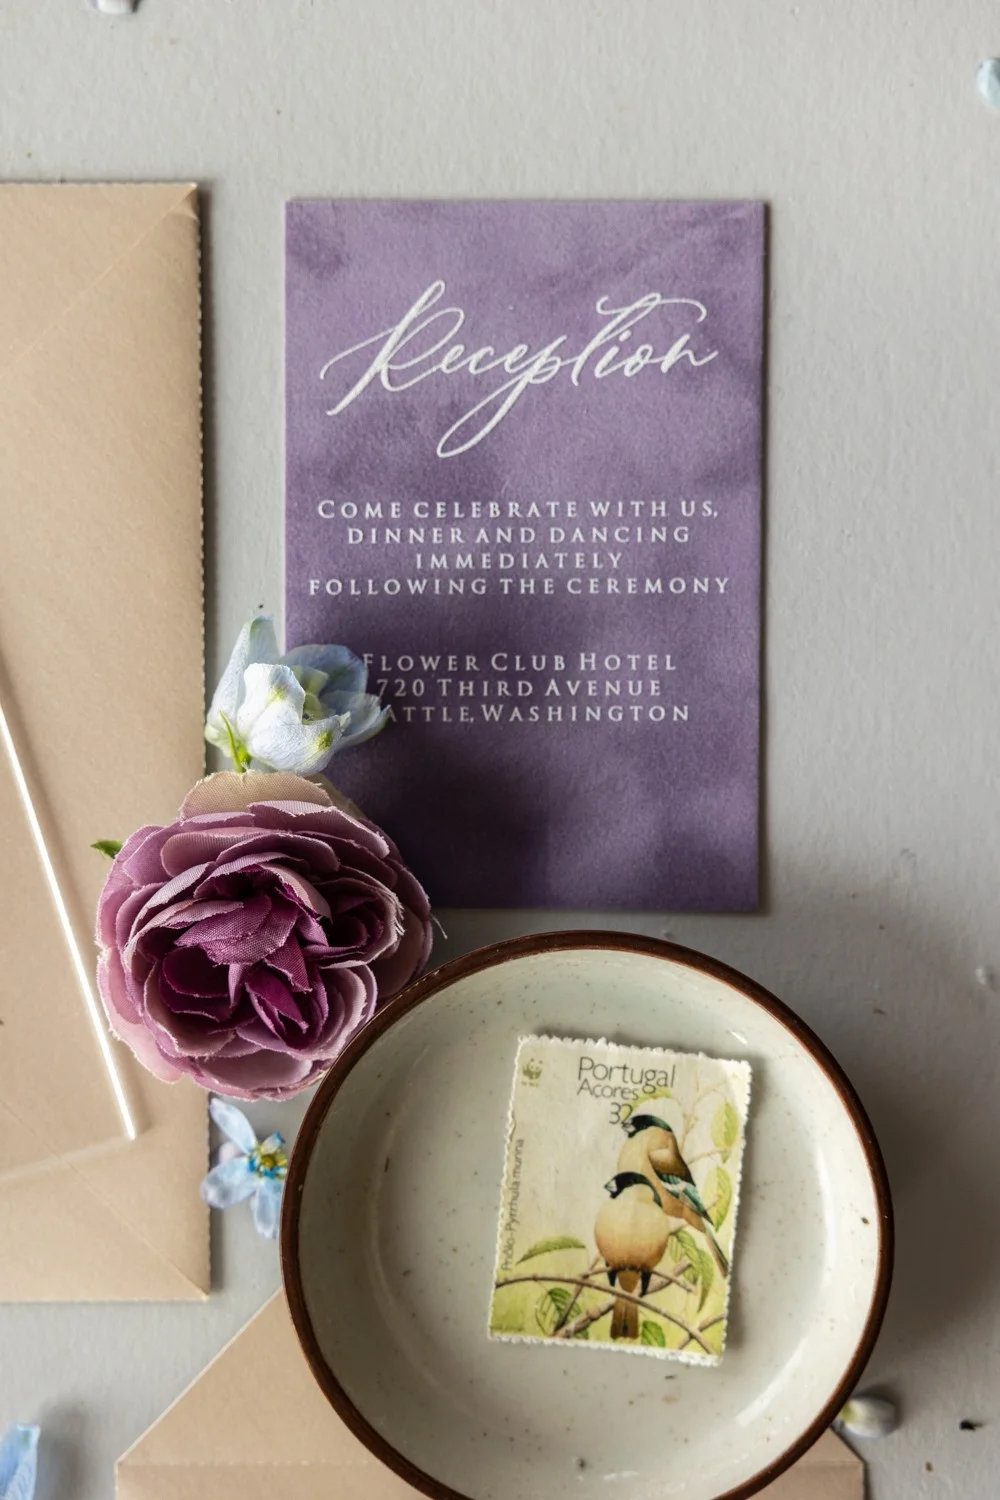 Arch Acrylic Gold Wedding Invitations, Velvet invitations, Purple Invitation, Lavender Invitation